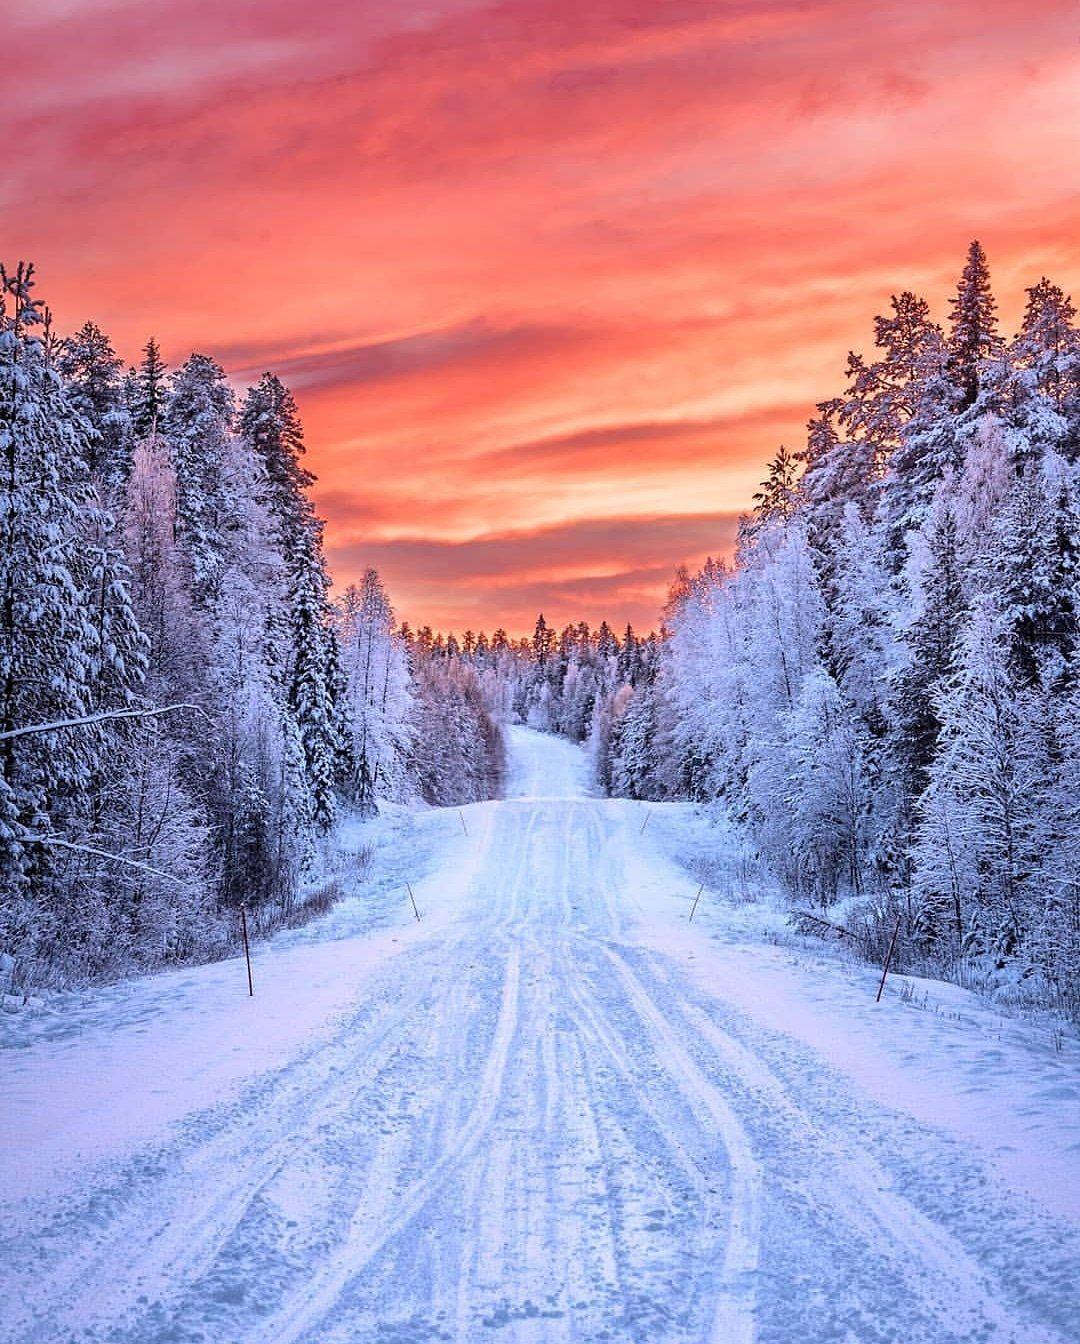 Road to the winter wonderland. #visitlapland #Finland #DriveSafe